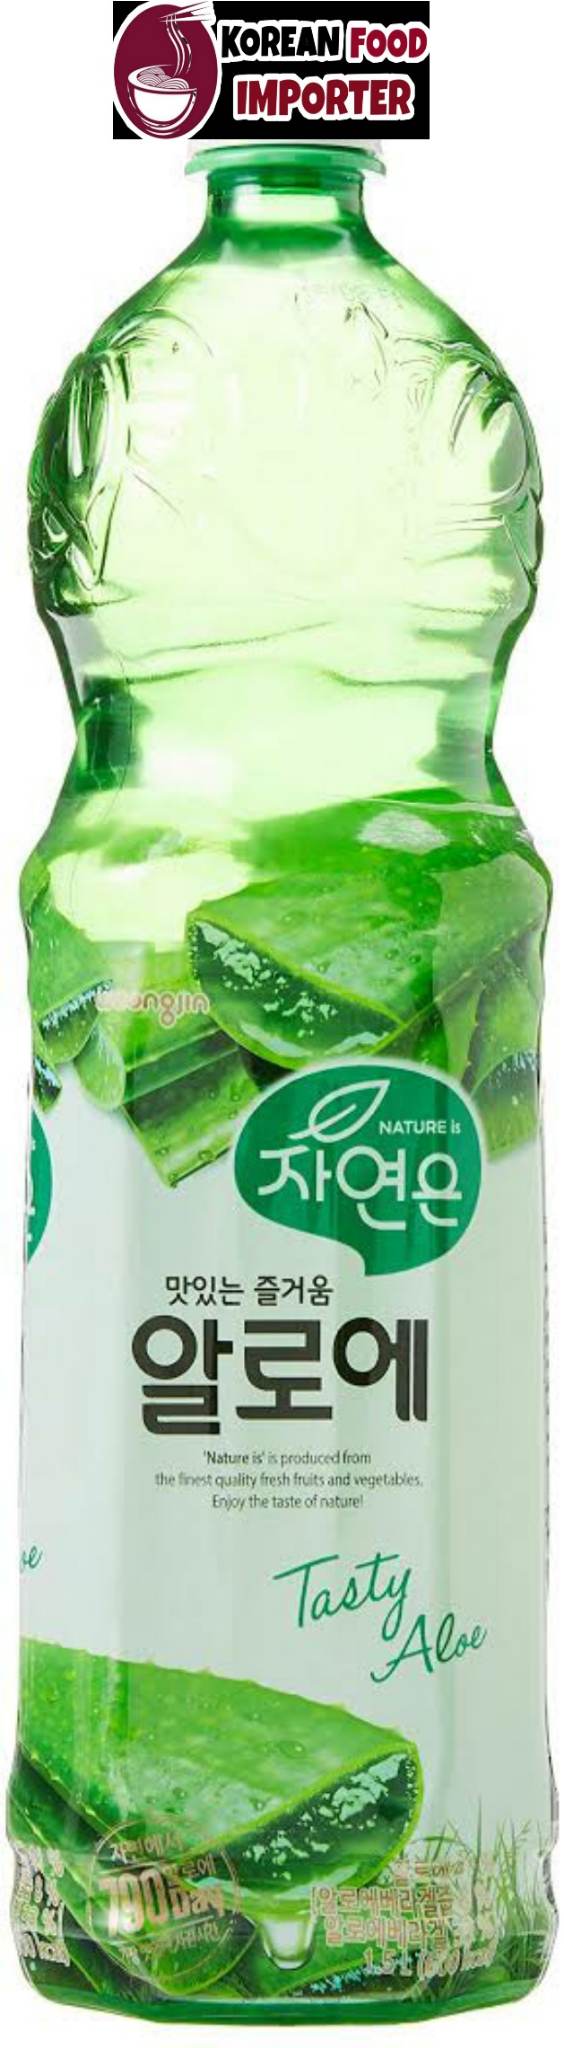 Woongjin Aloe Vera Juice Drinks 15l Authentic Korean Products Lazada Ph 4813